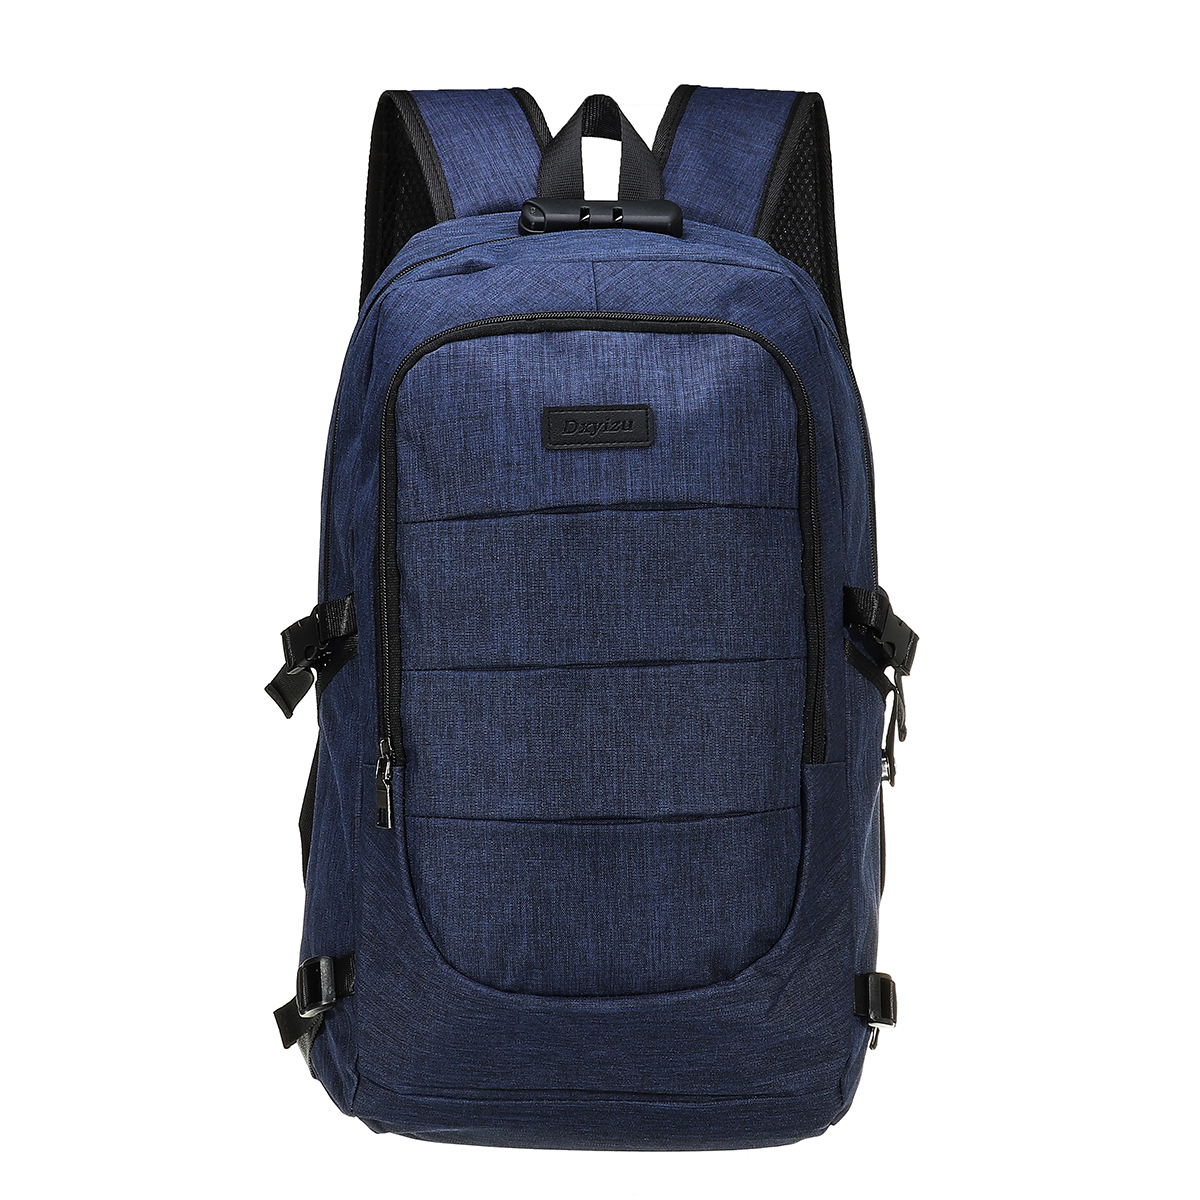 Unisex Anti-Theft Laptop Backpack Travel Business School Bag Rucksack ...